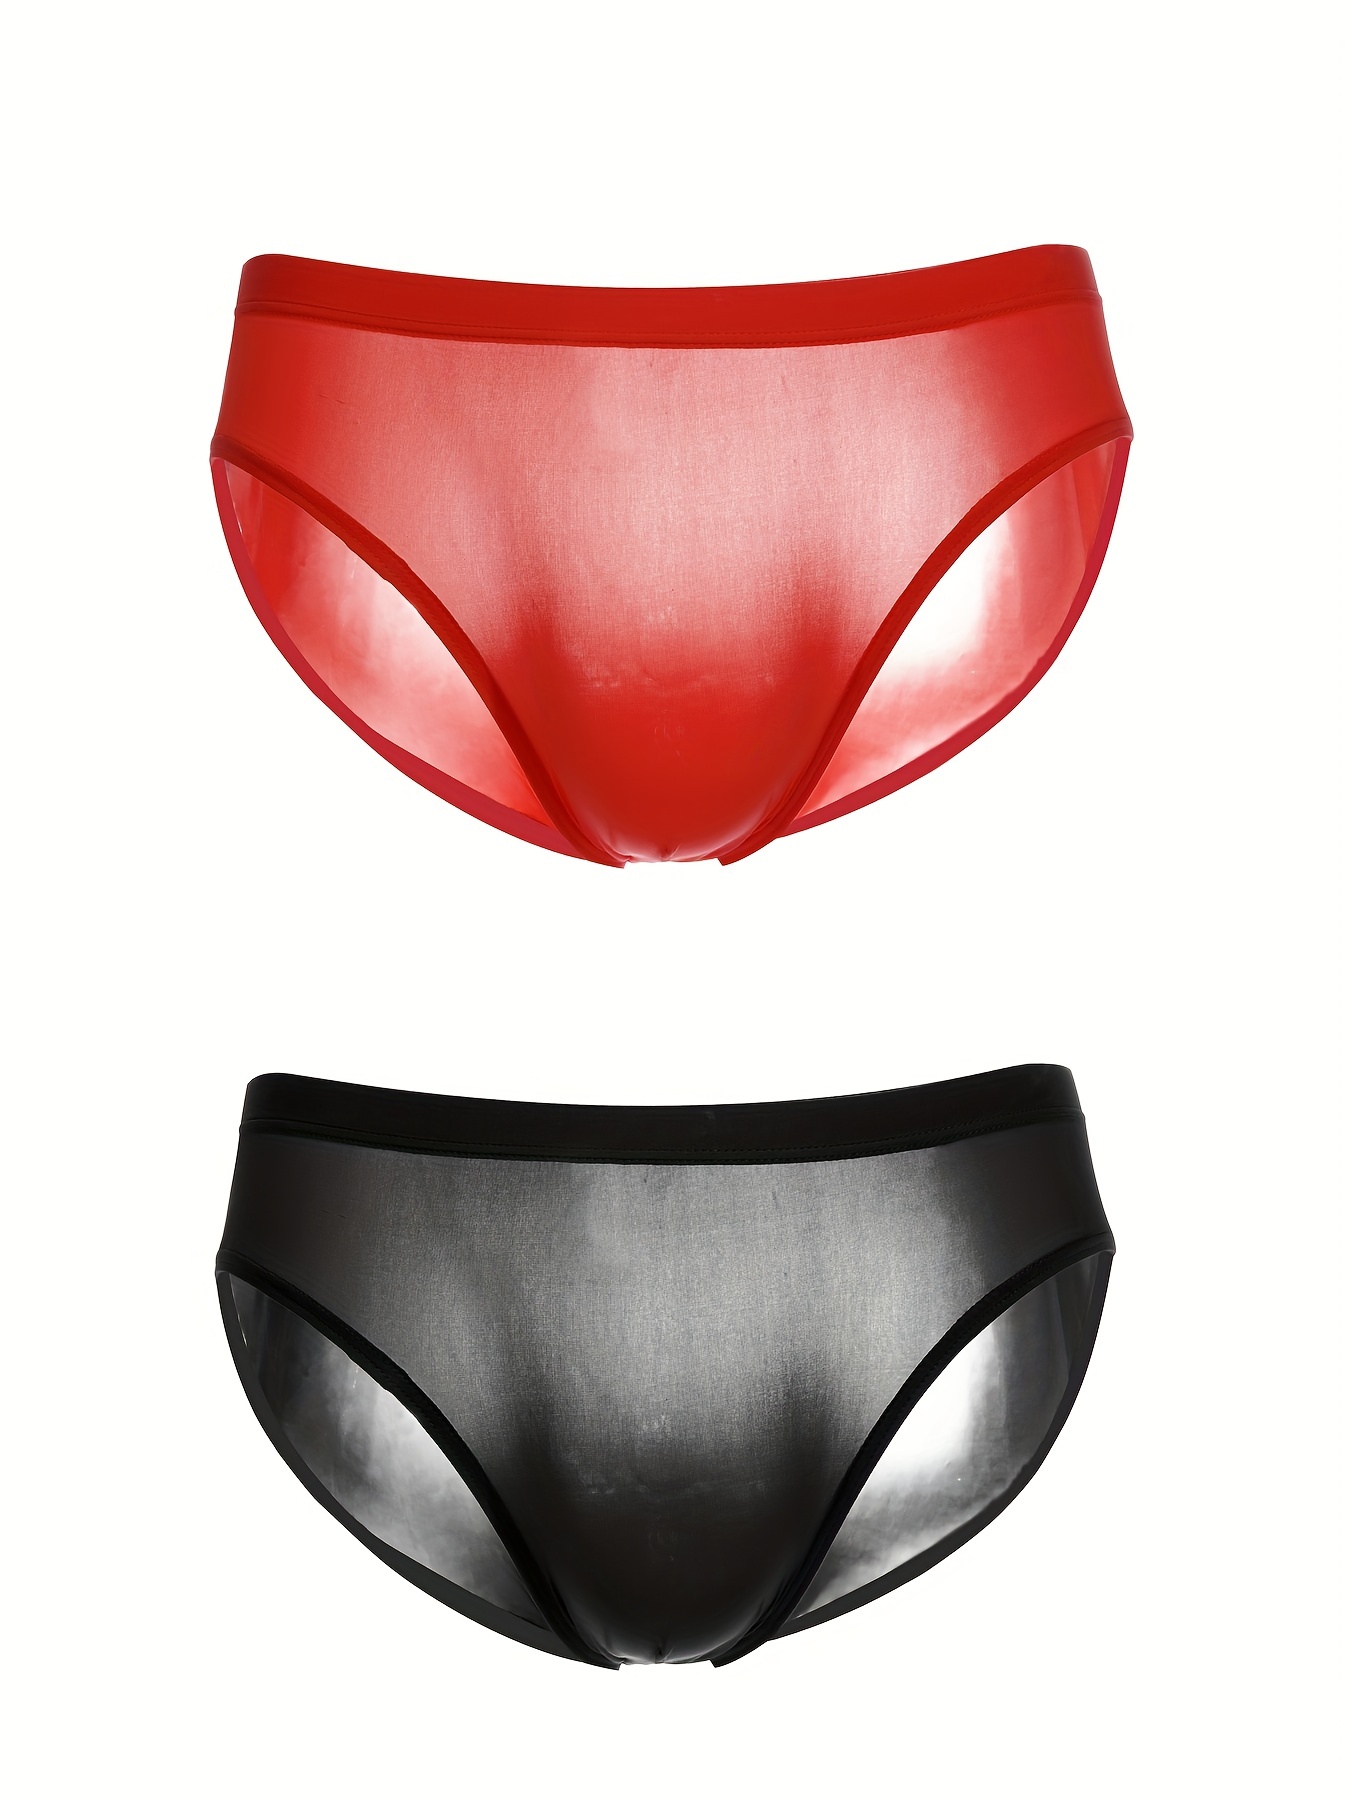 Men's Underwear Transparent Briefs Thin Mesh Bagless Tight Panties